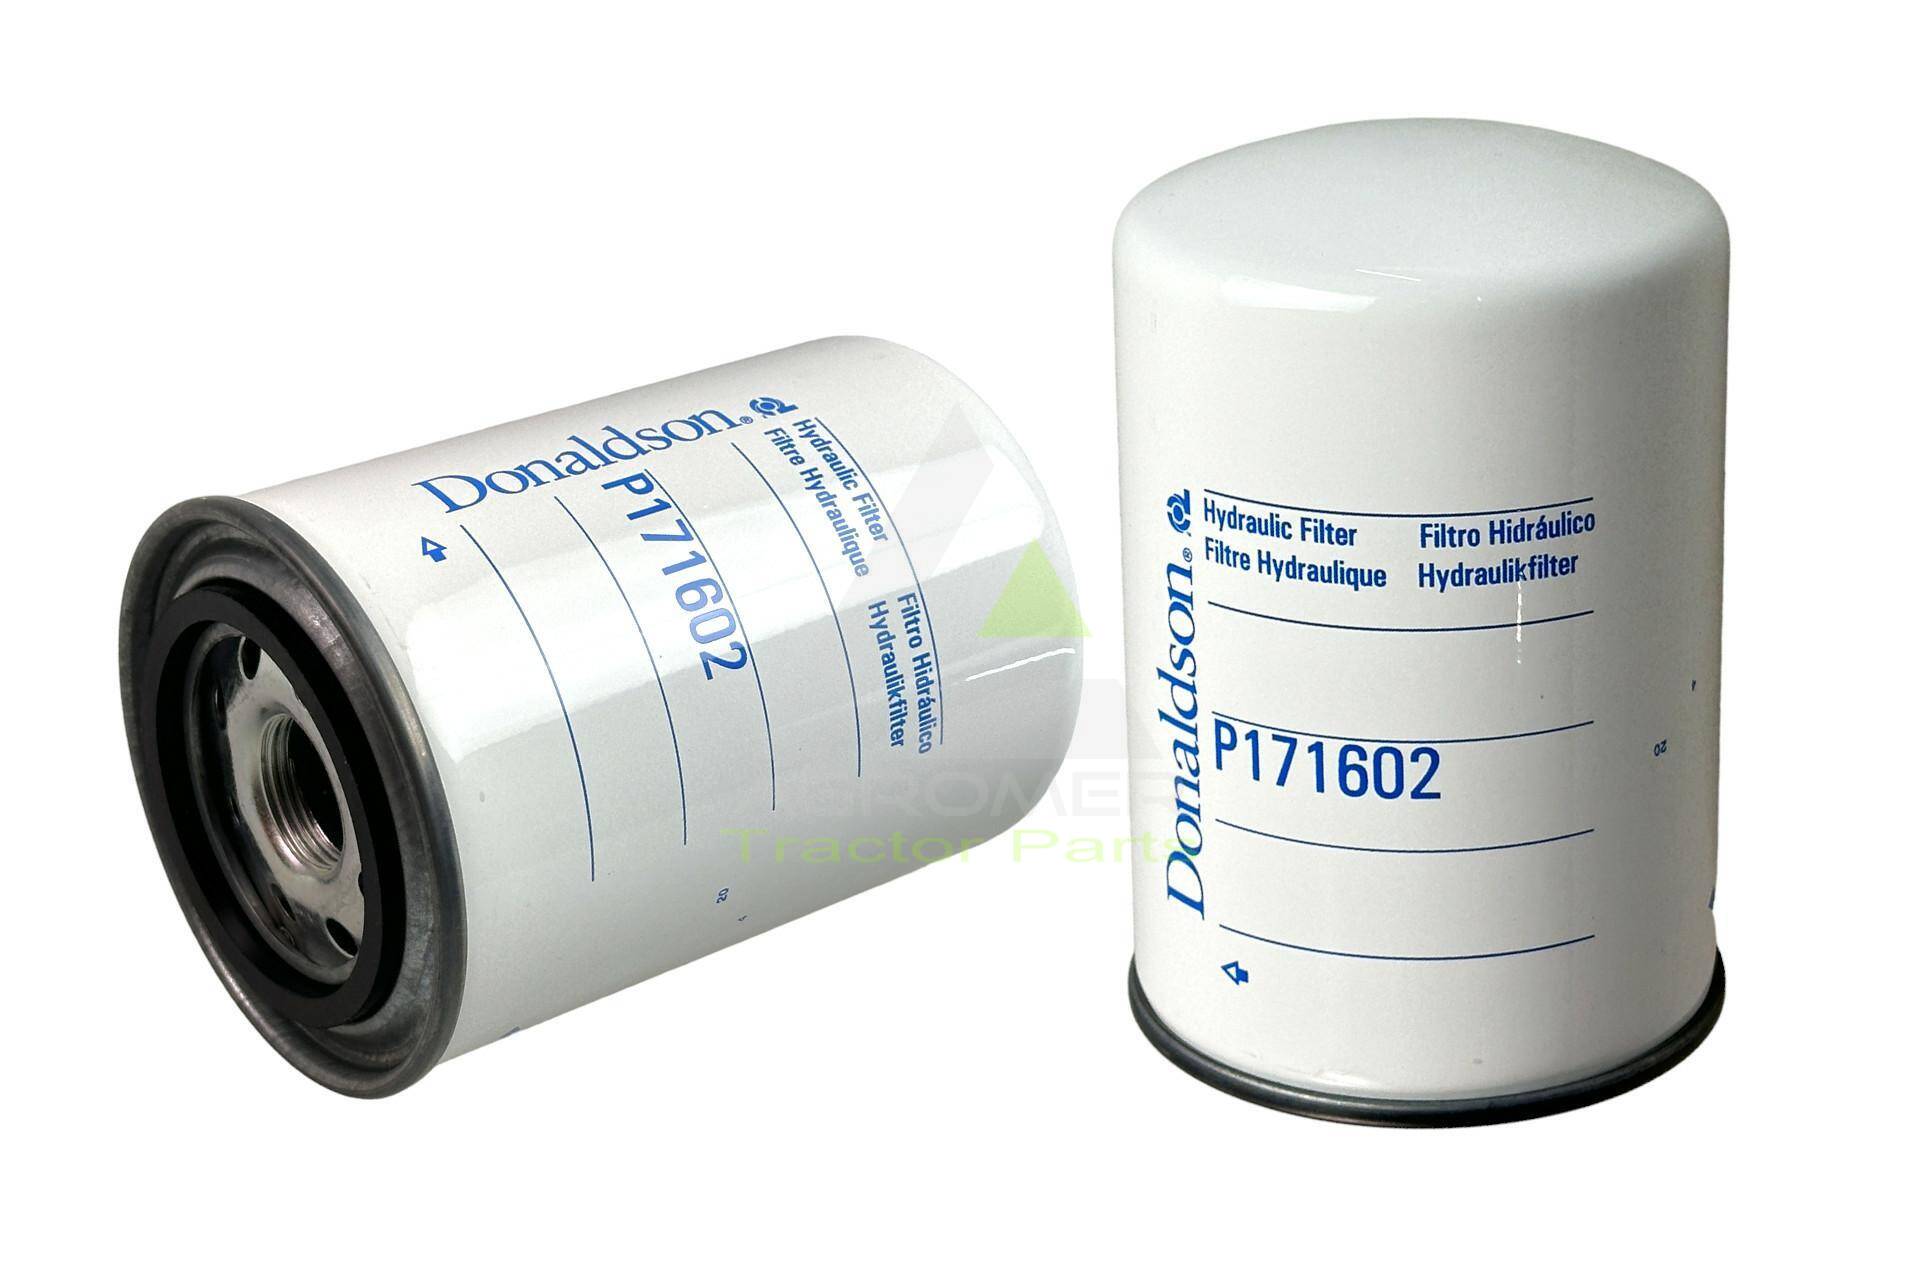 P171602 Filtr hyrdauliczny JCB